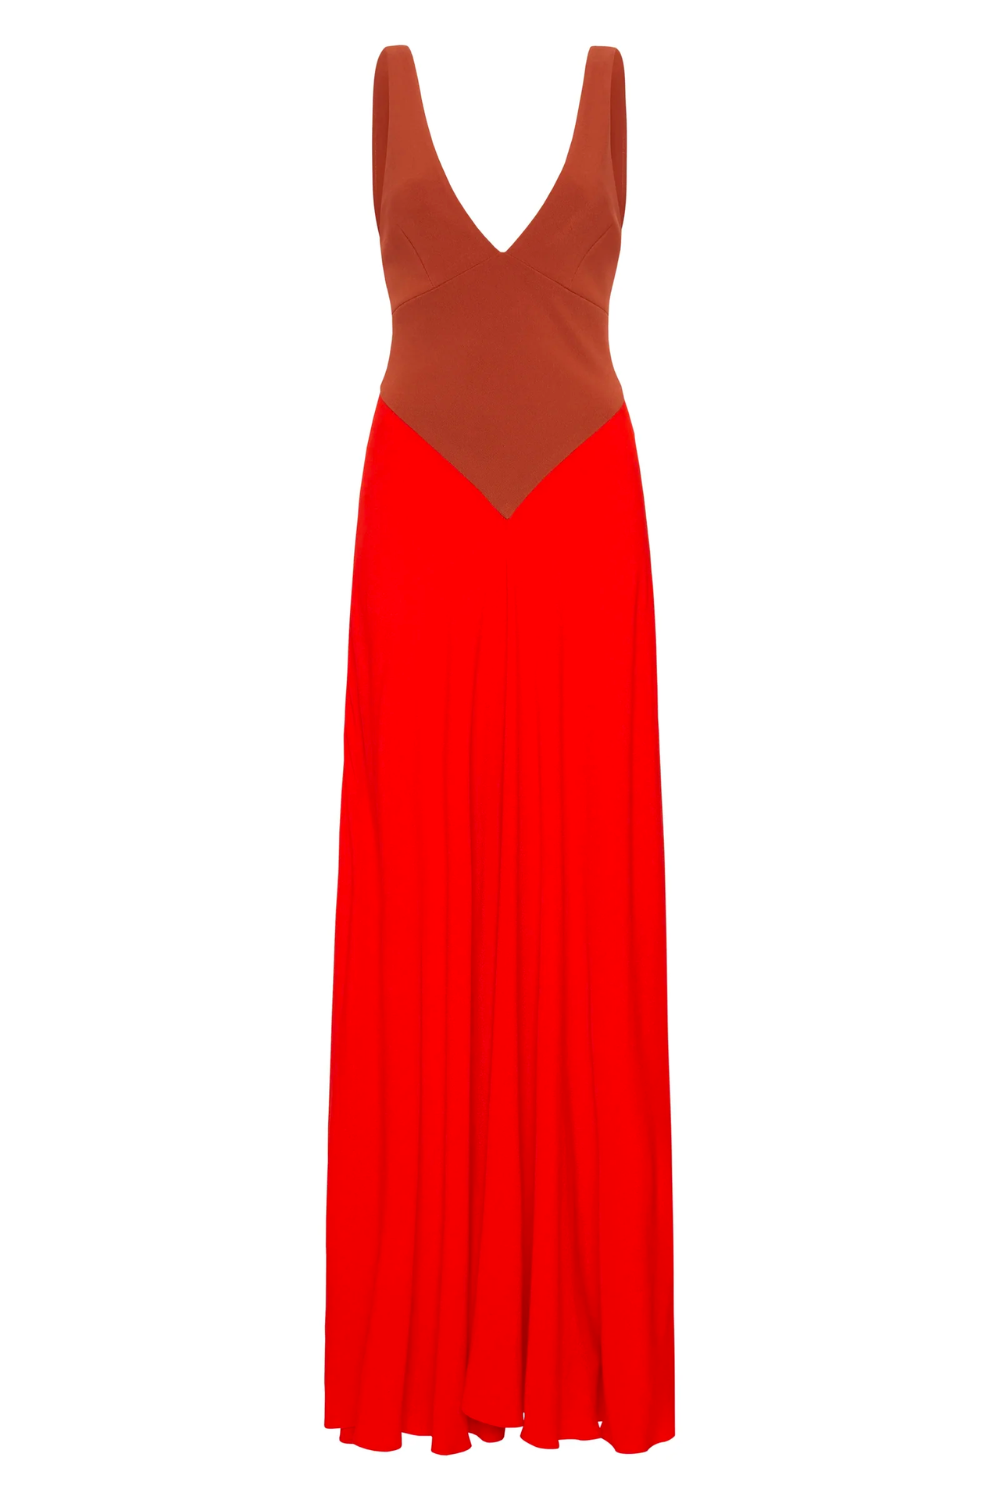 Bianca-Spender-Red-Dress